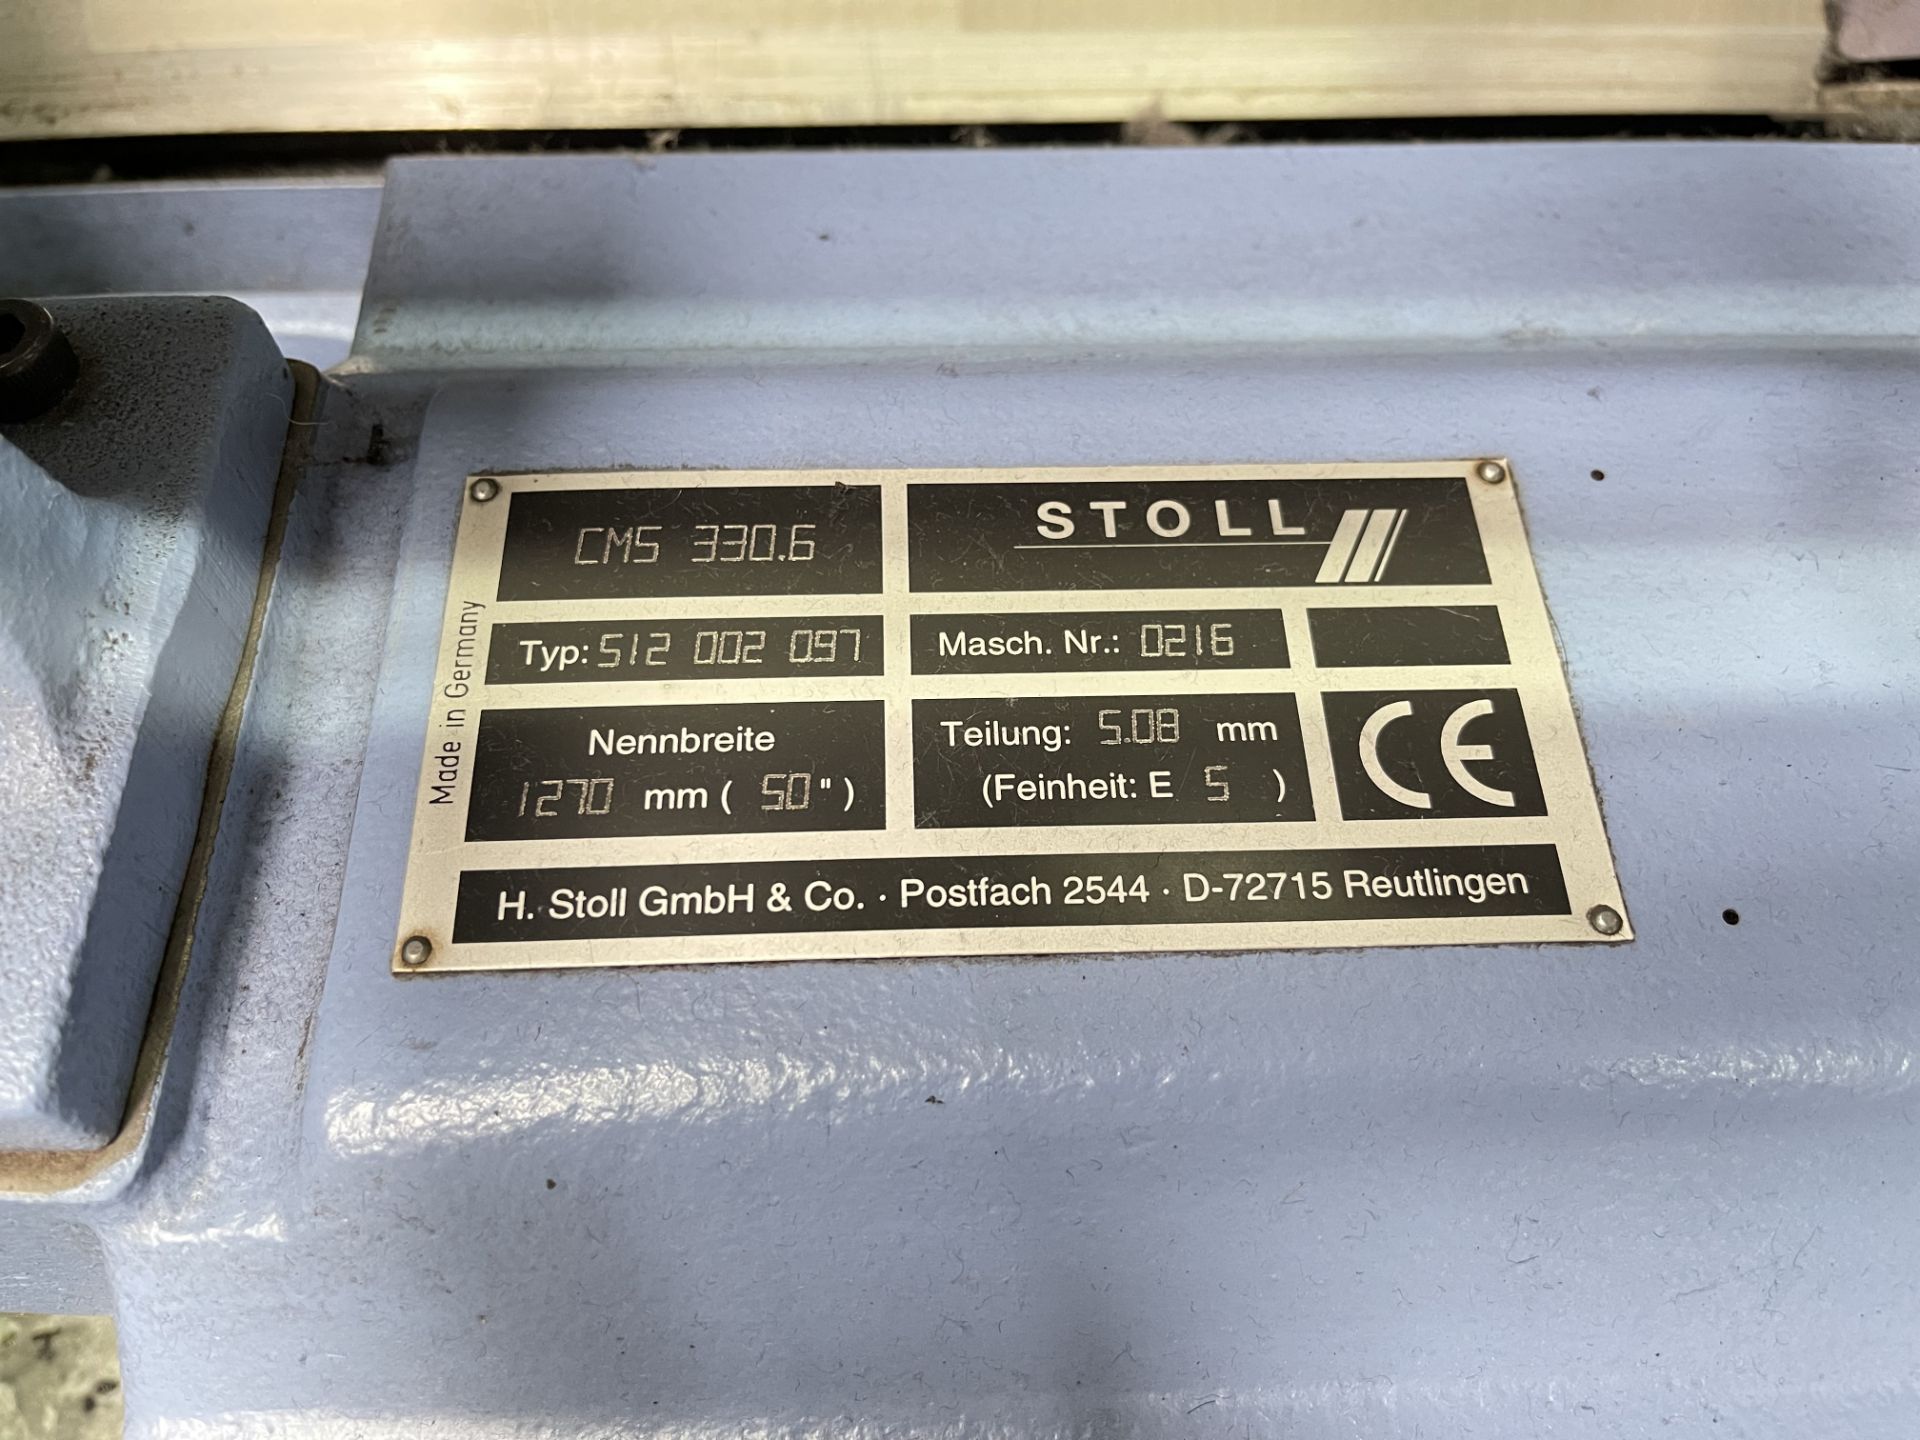 Stoll CMS 330.6 Type 512 002 097 Flat Bed Knitting Machine - Image 8 of 8